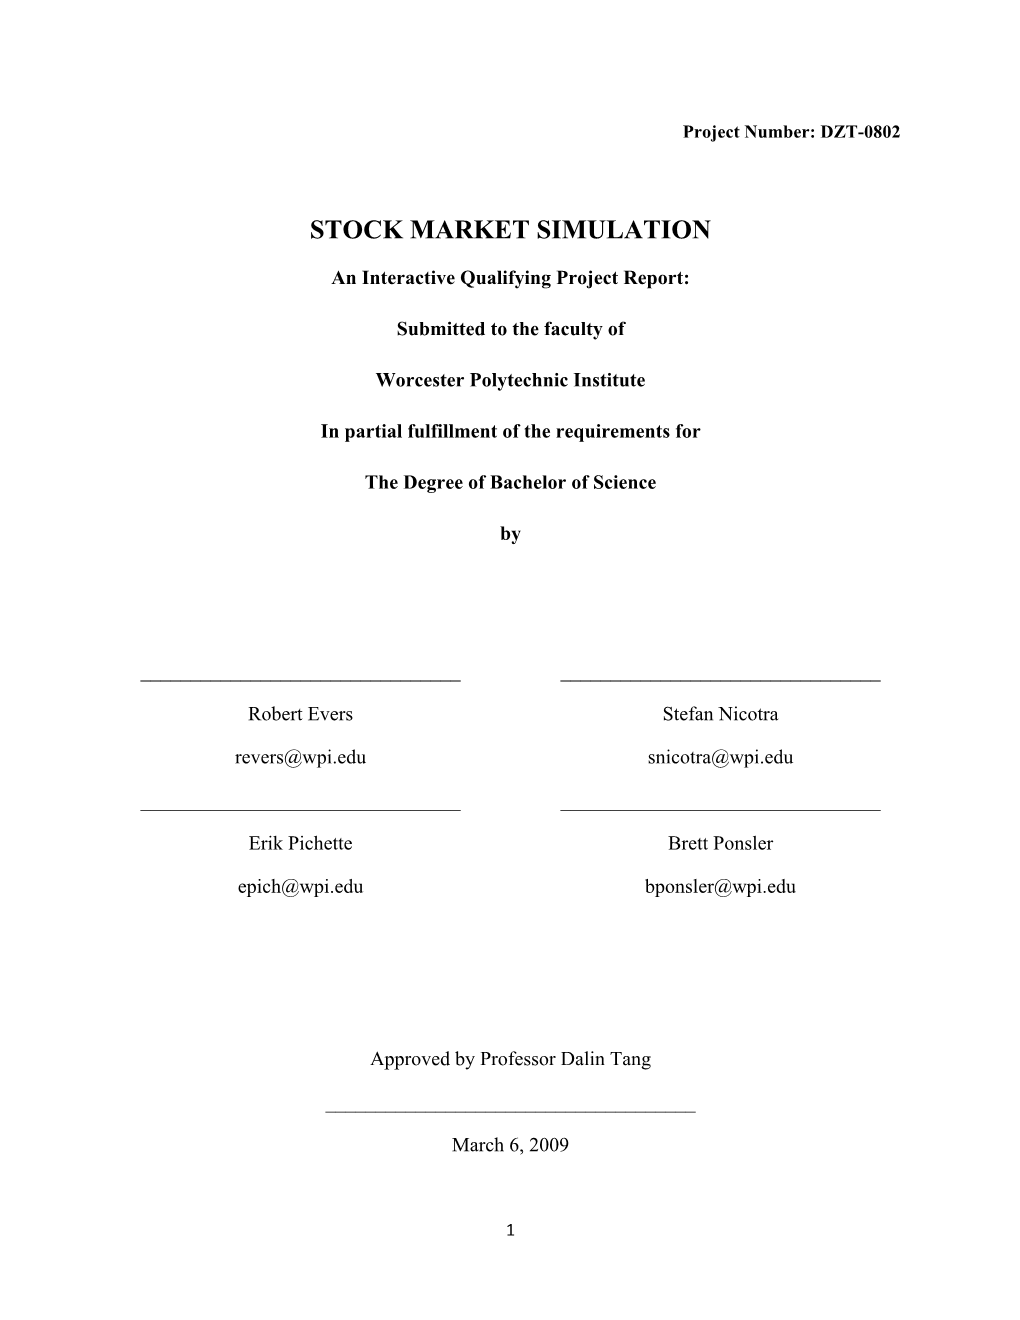 Stock Market Simulation